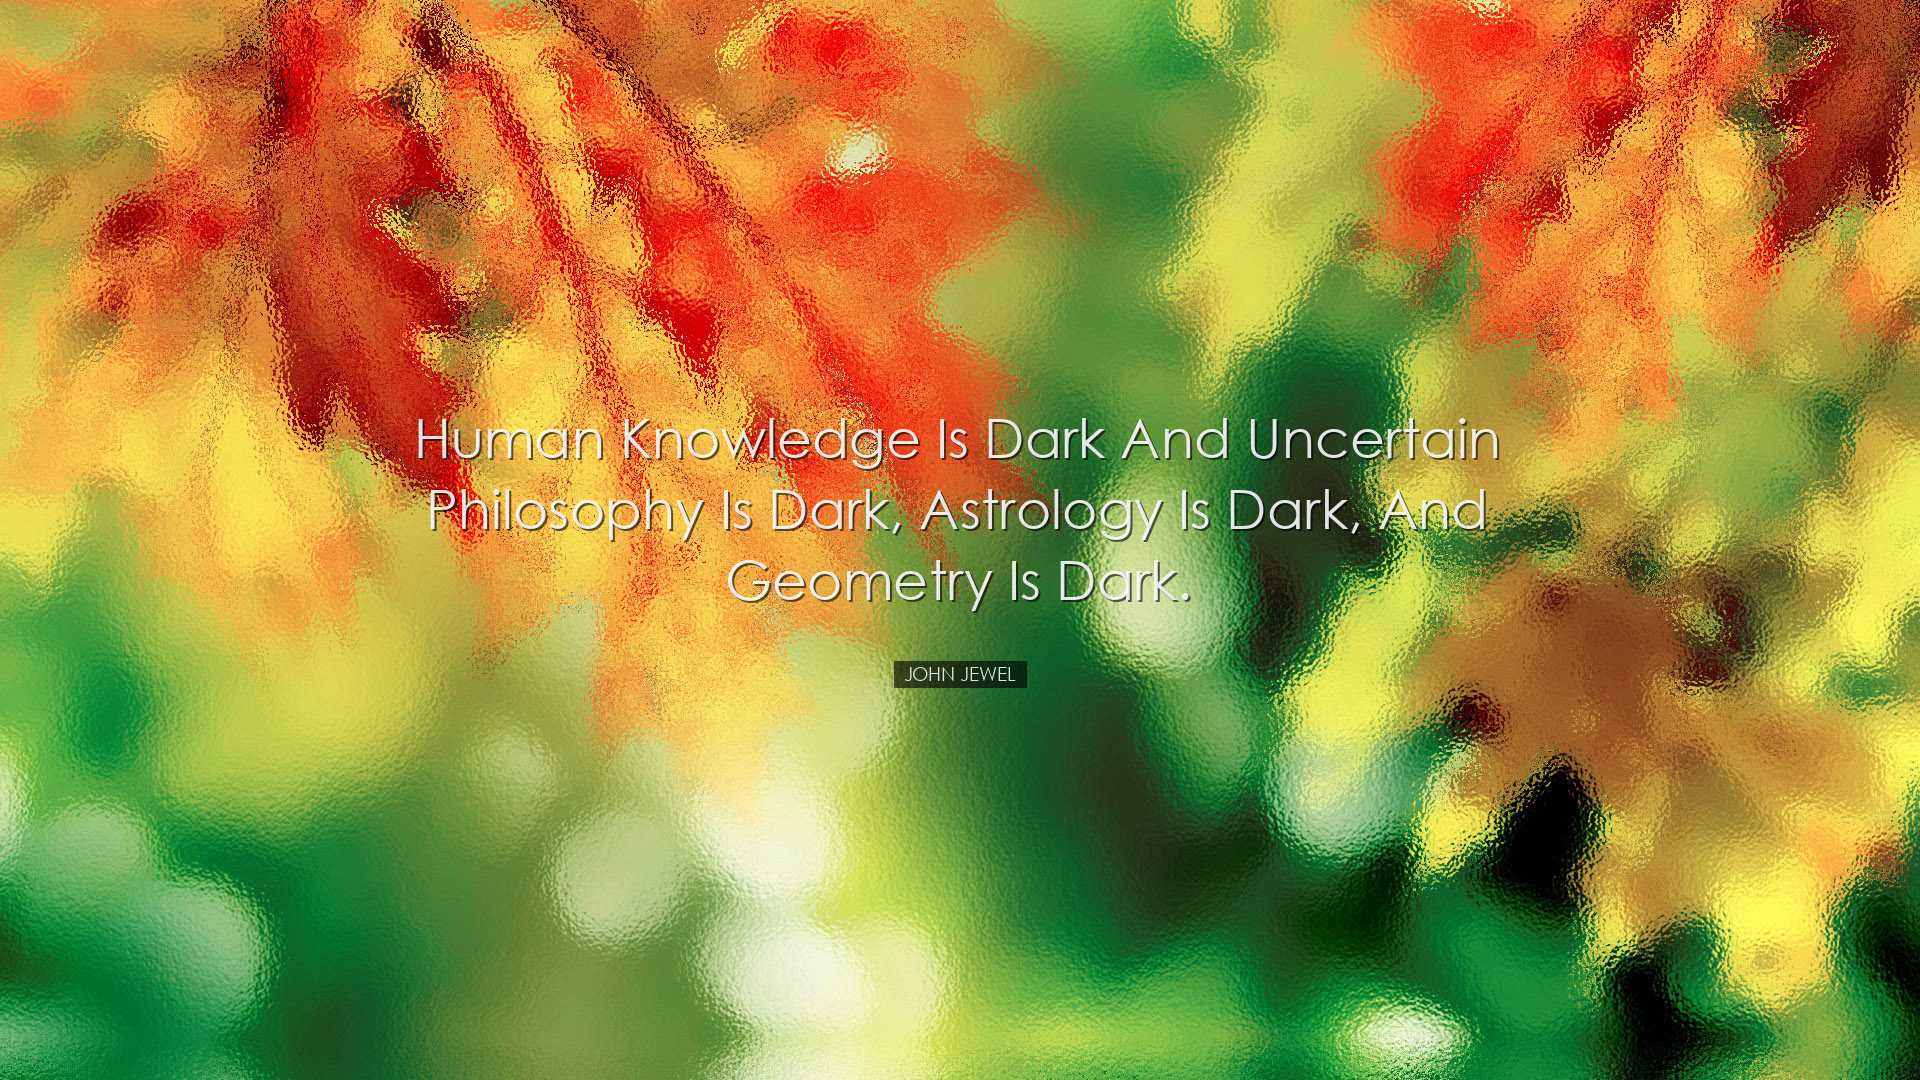 Human knowledge is dark and uncertain philosophy is dark, astrolog